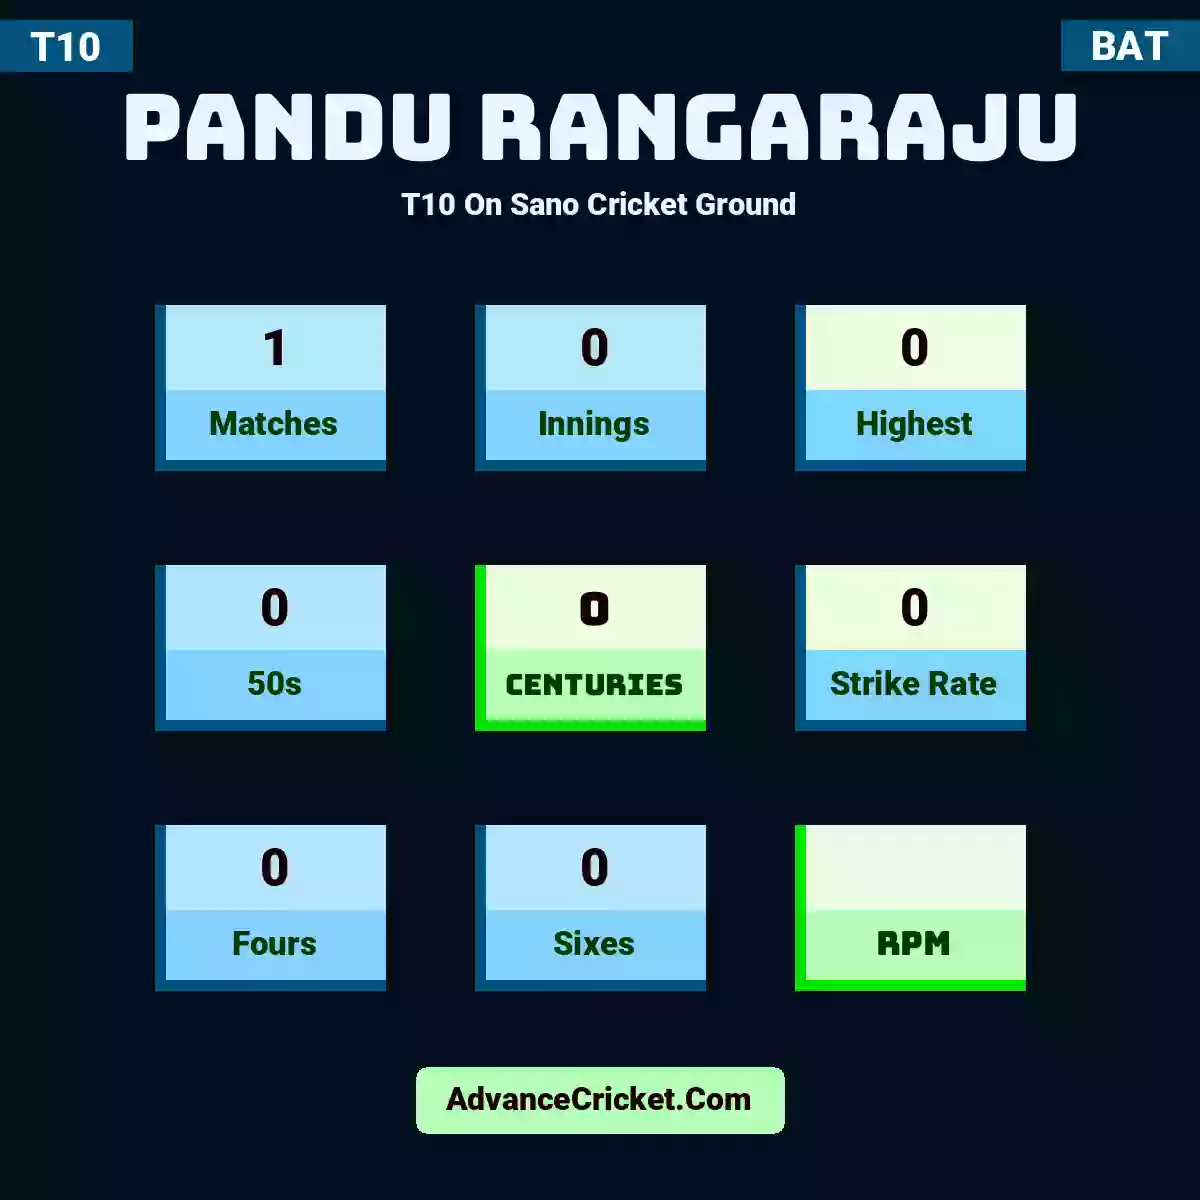 Pandu Rangaraju T10  On Sano Cricket Ground, Pandu Rangaraju played 1 matches, scored 0 runs as highest, 0 half-centuries, and 0 centuries, with a strike rate of 0. P.Rangaraju hit 0 fours and 0 sixes.